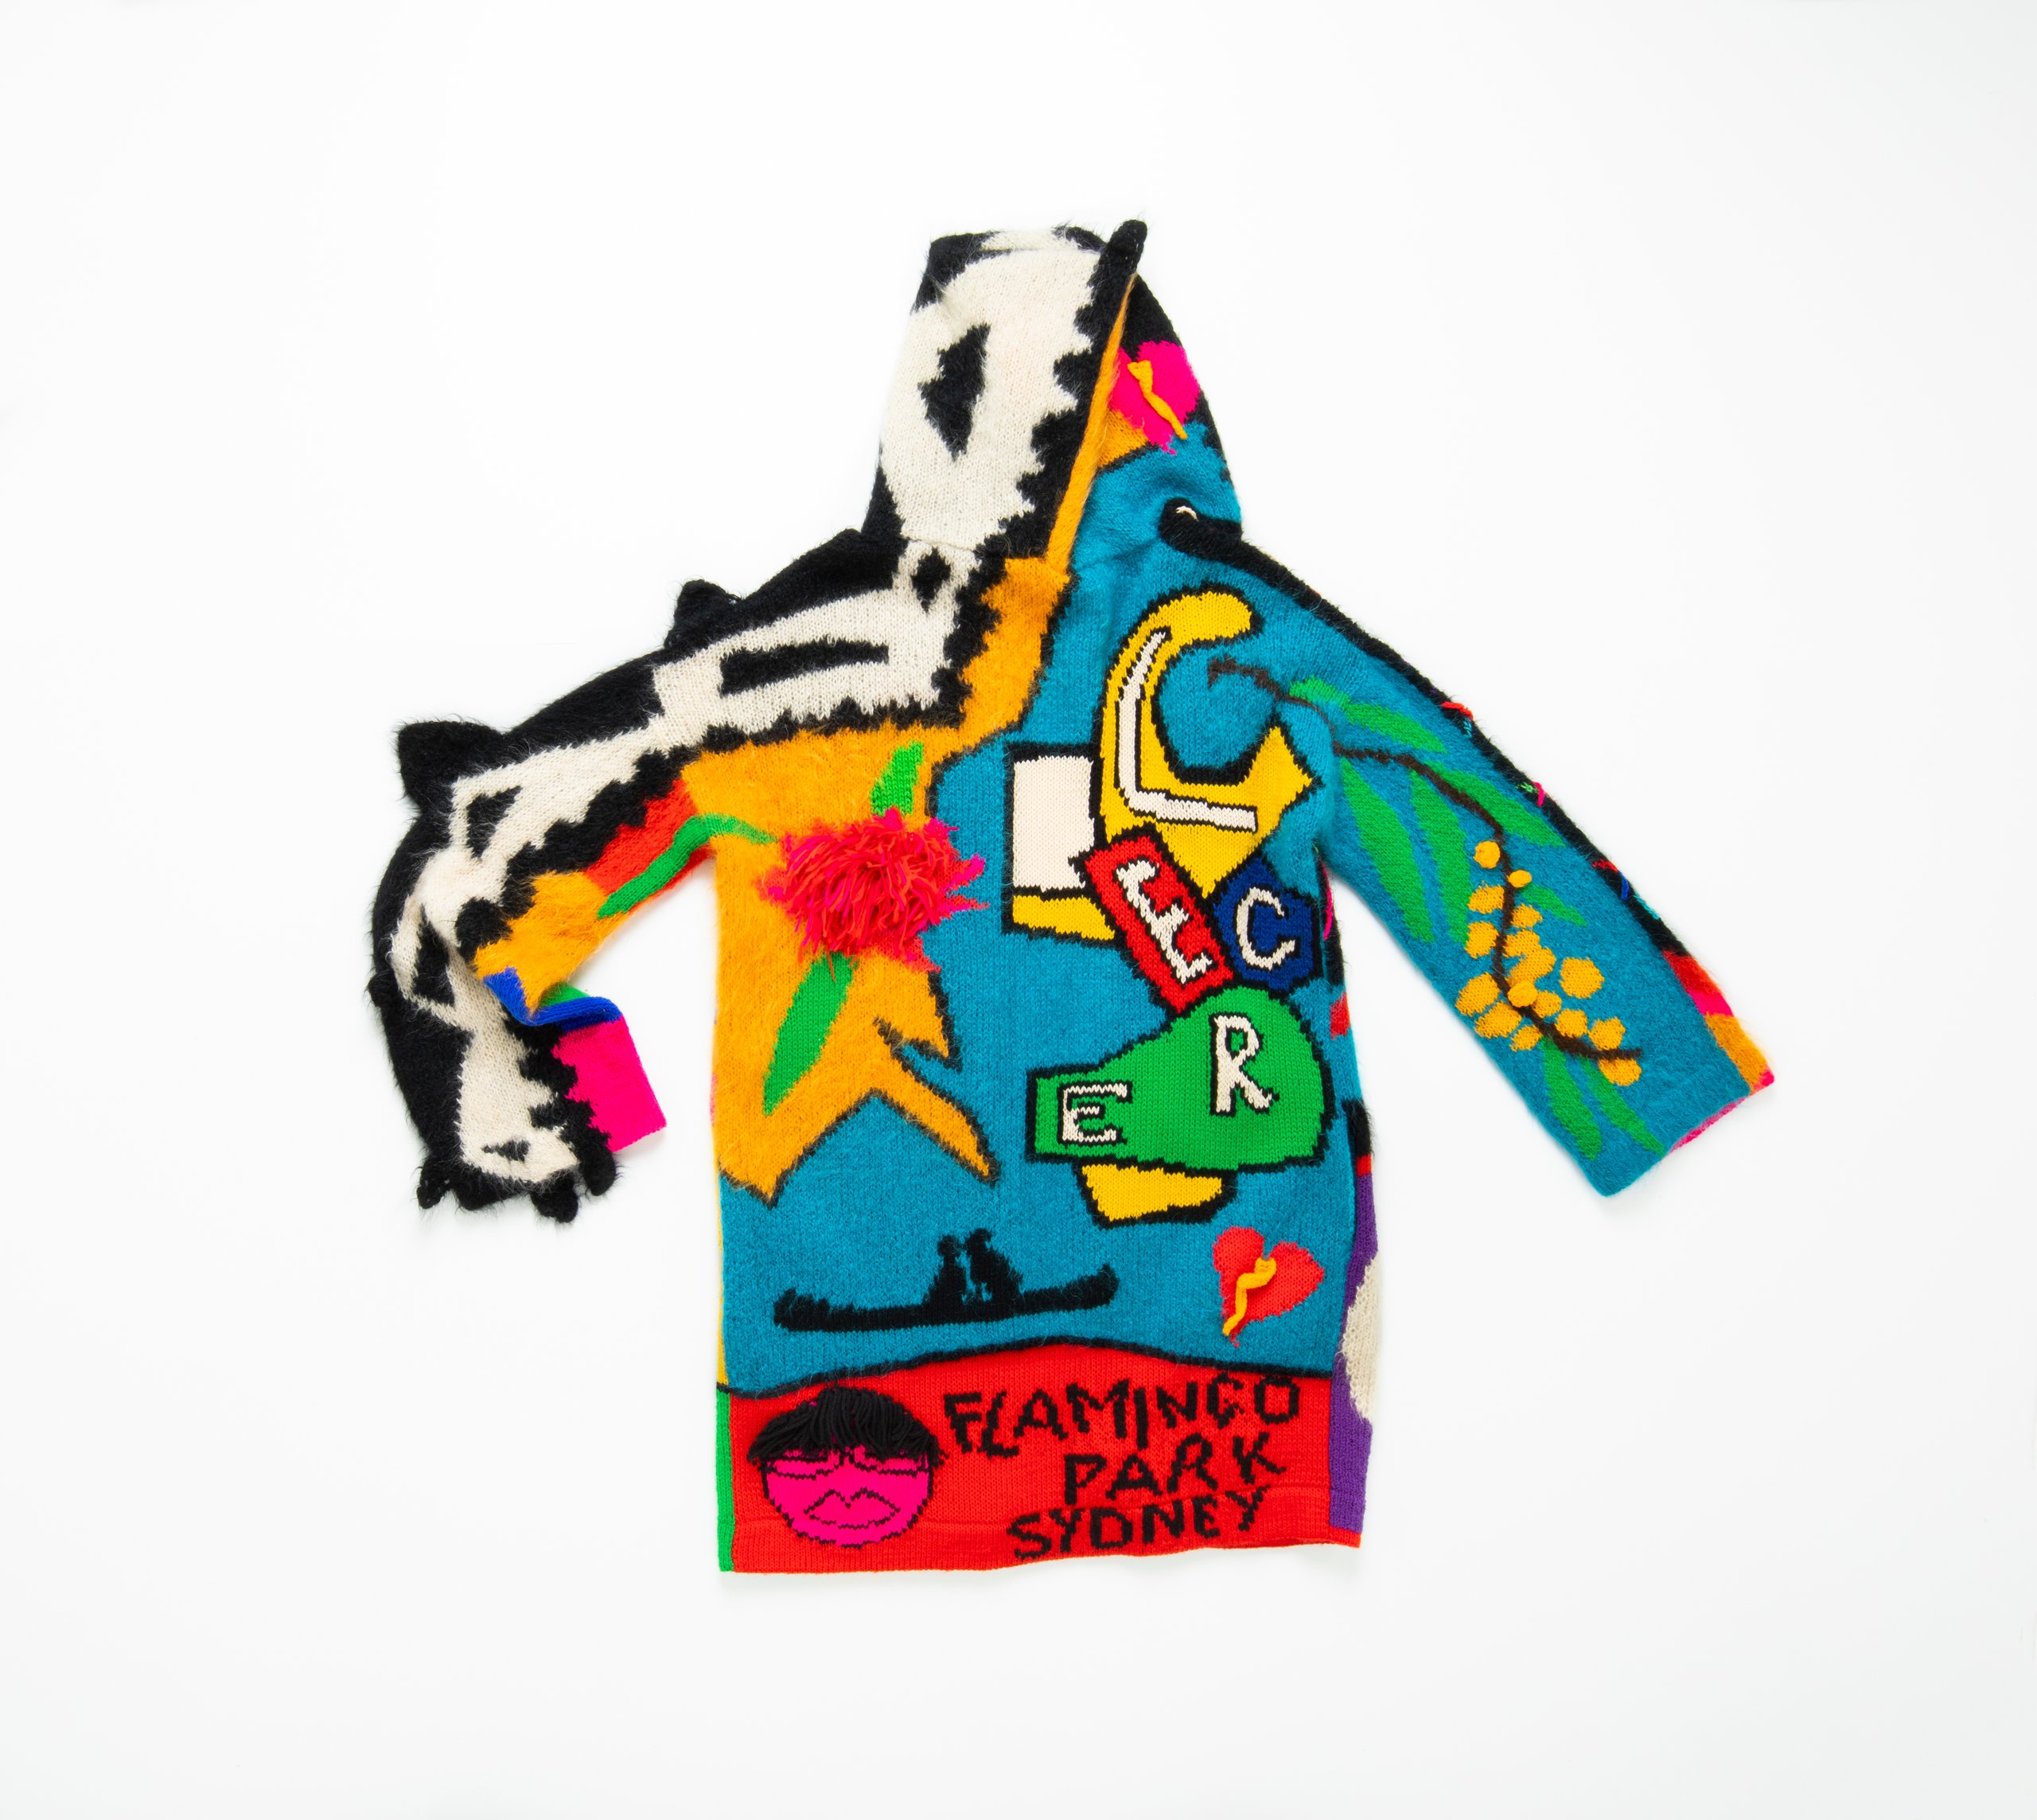 'Flamingo Park Sydney Collage' jacket by Jenny Kee